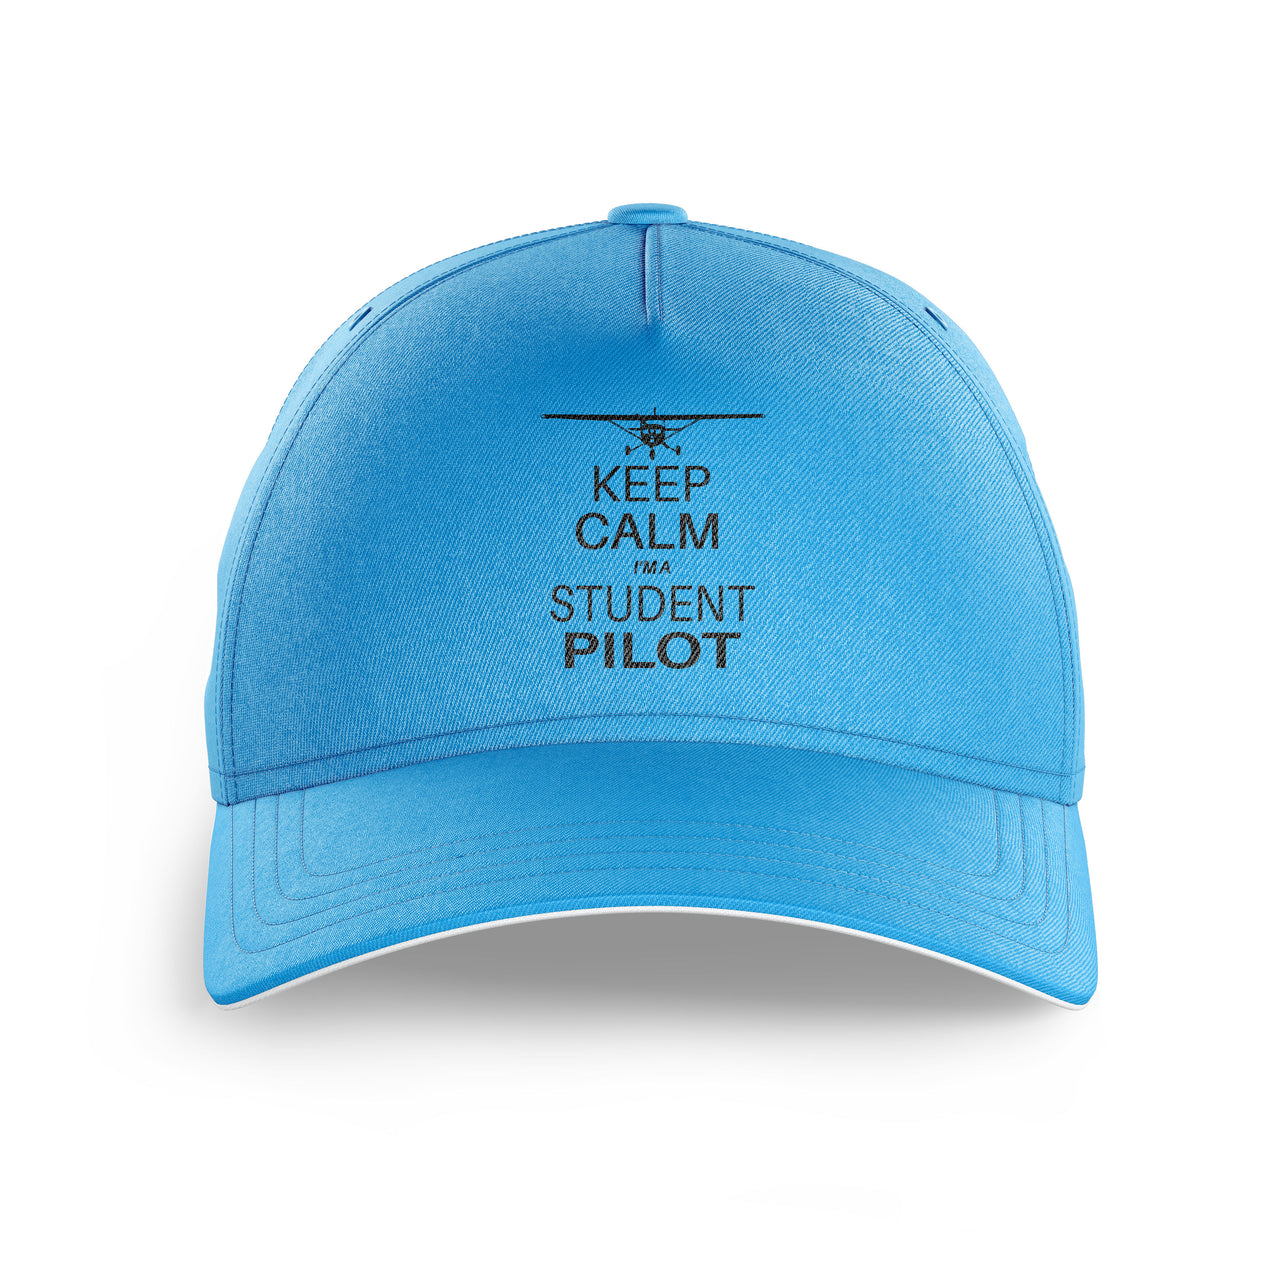 Student Pilot Printed Hats